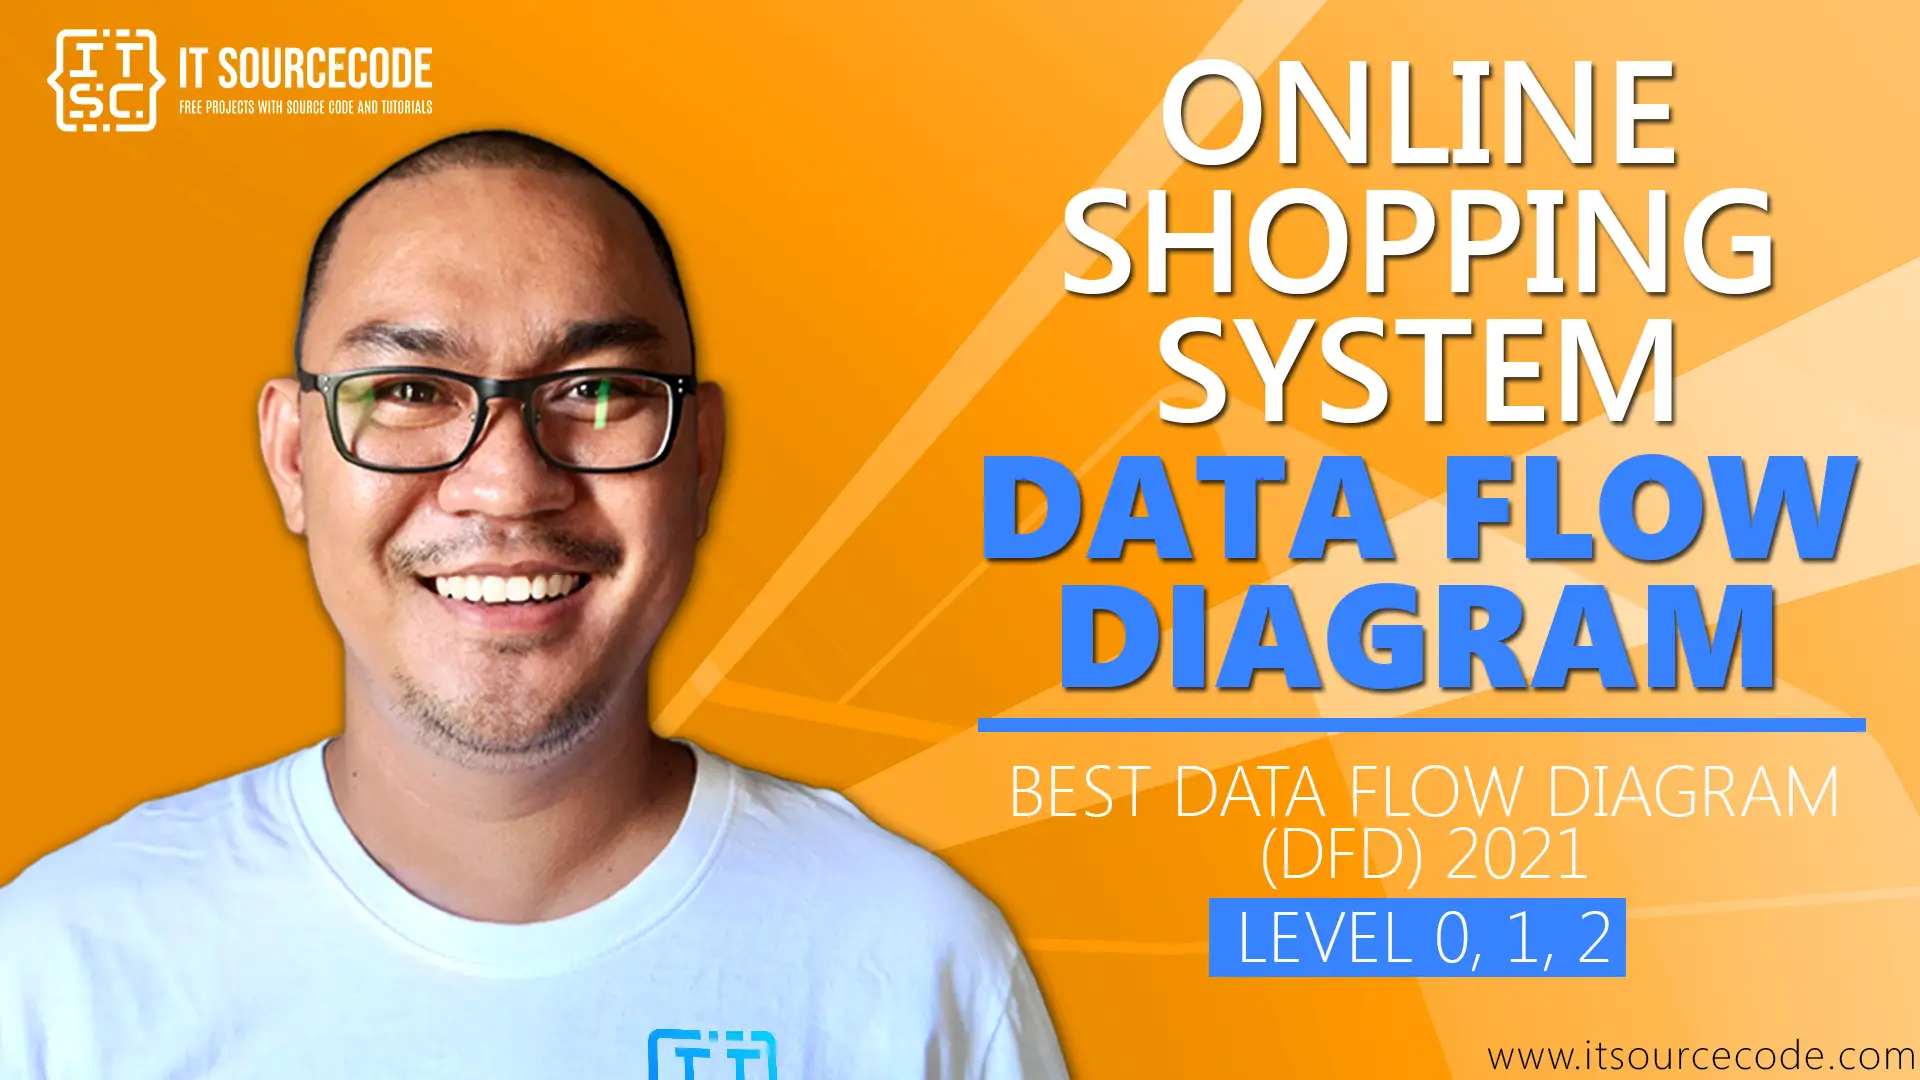 Best Data Flow Diagram - Online Shopping System DFD Level 0 1 2 - 2021